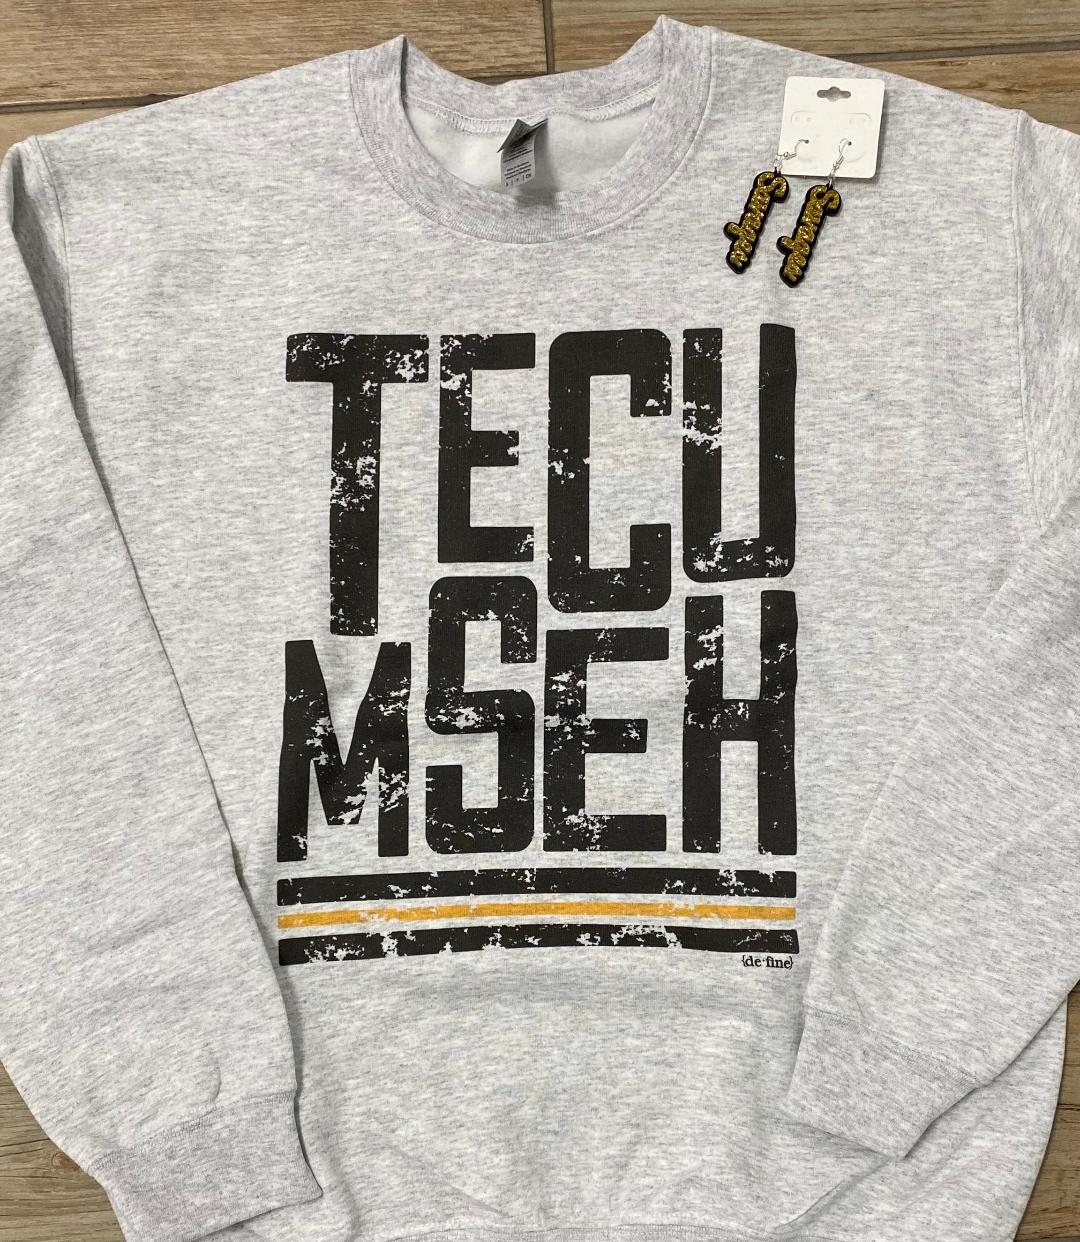 Tecumseh Block Letter Graphic Tee or Sweatshirt